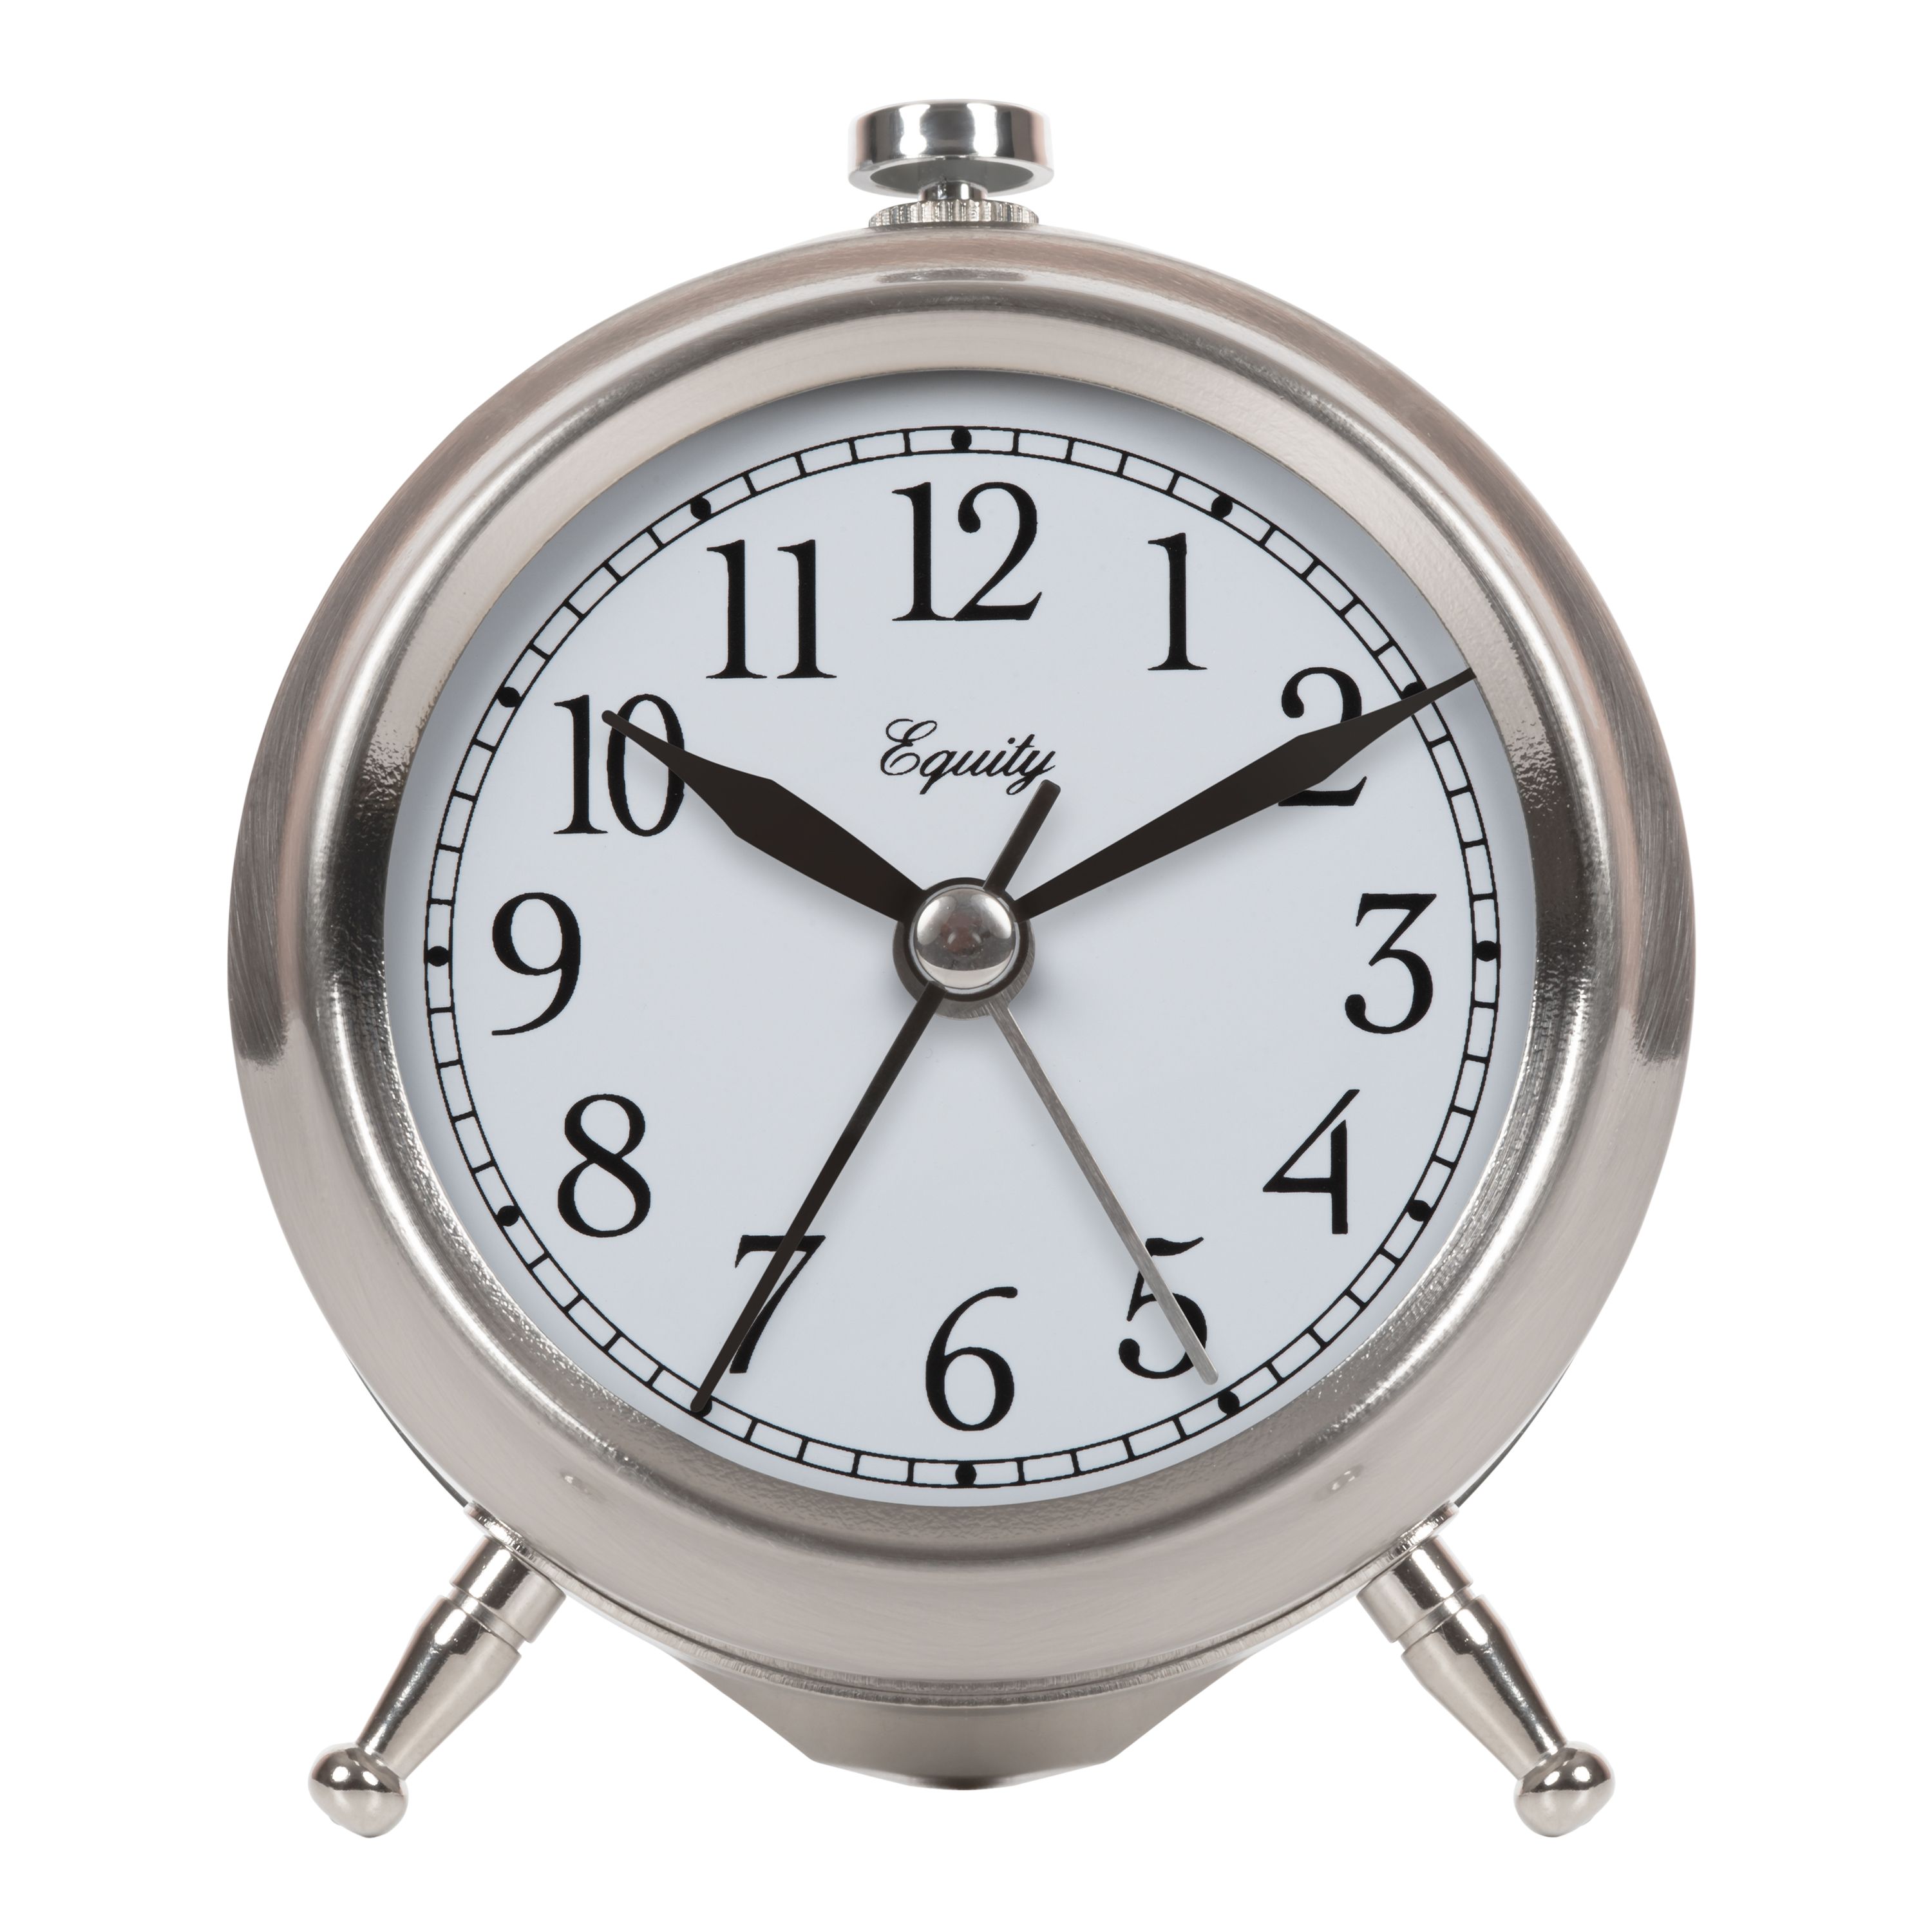 Picture of La Crosse Technology Ltd 25655 Silver Table Alarm Clock